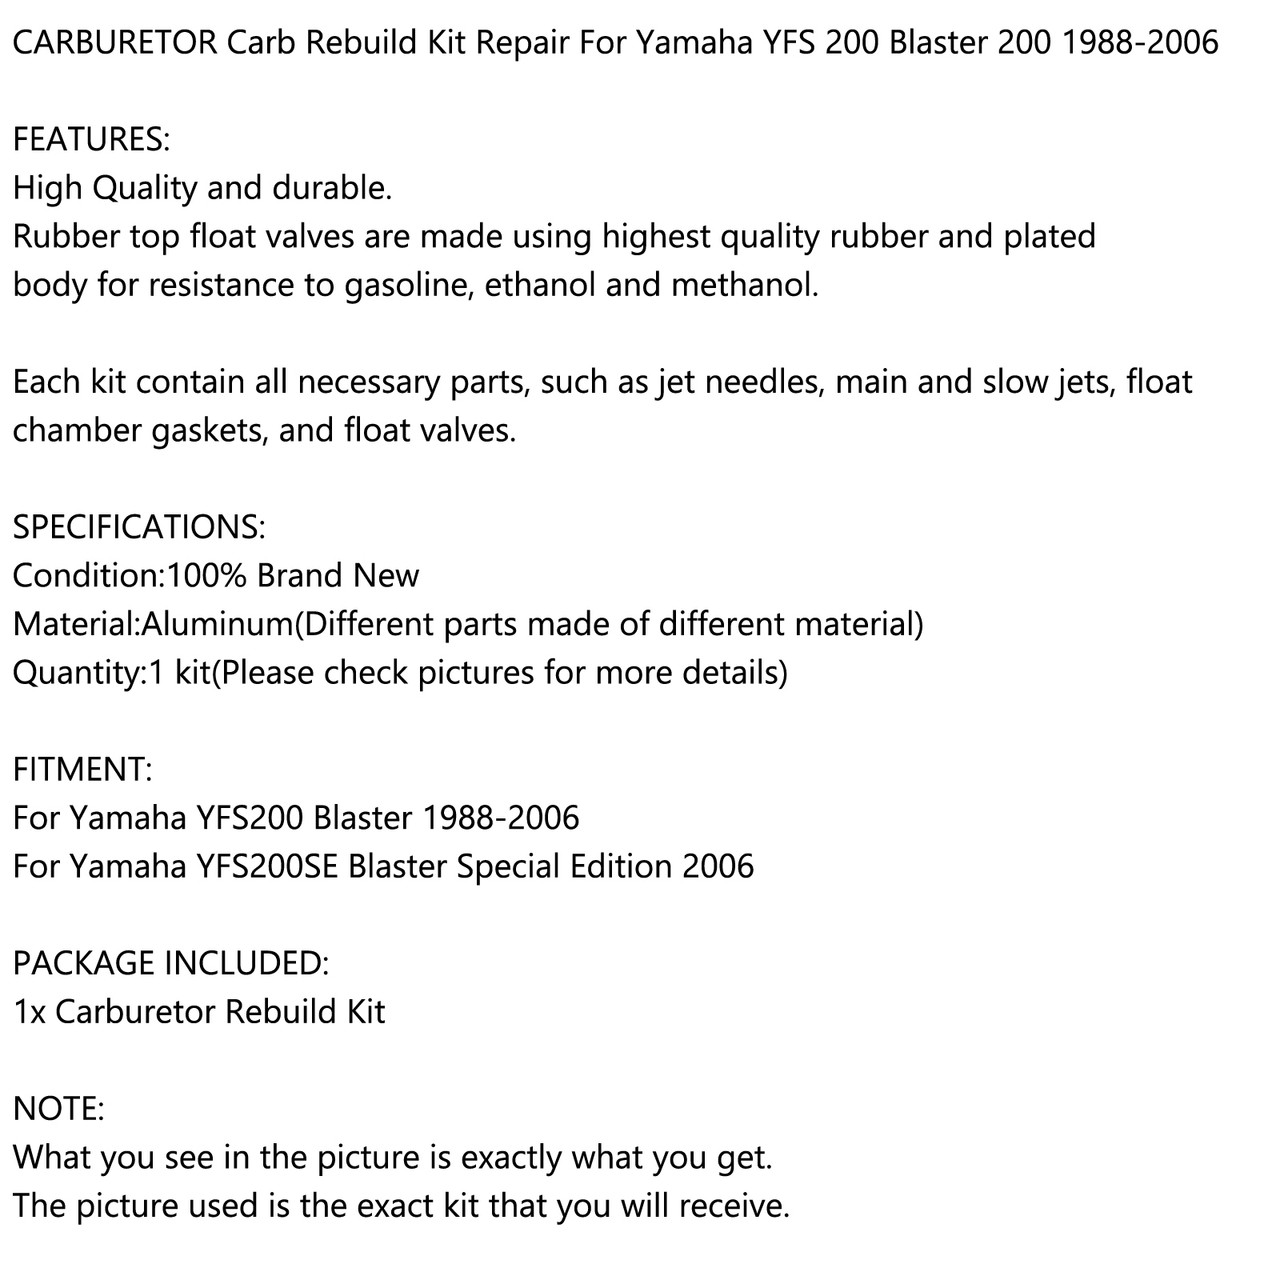 Carburetor CARB Rebuild Repair Kit For Yamaha YFS200 Blaster 88-06 YFS200SE Blaster Special Edition 06 Black